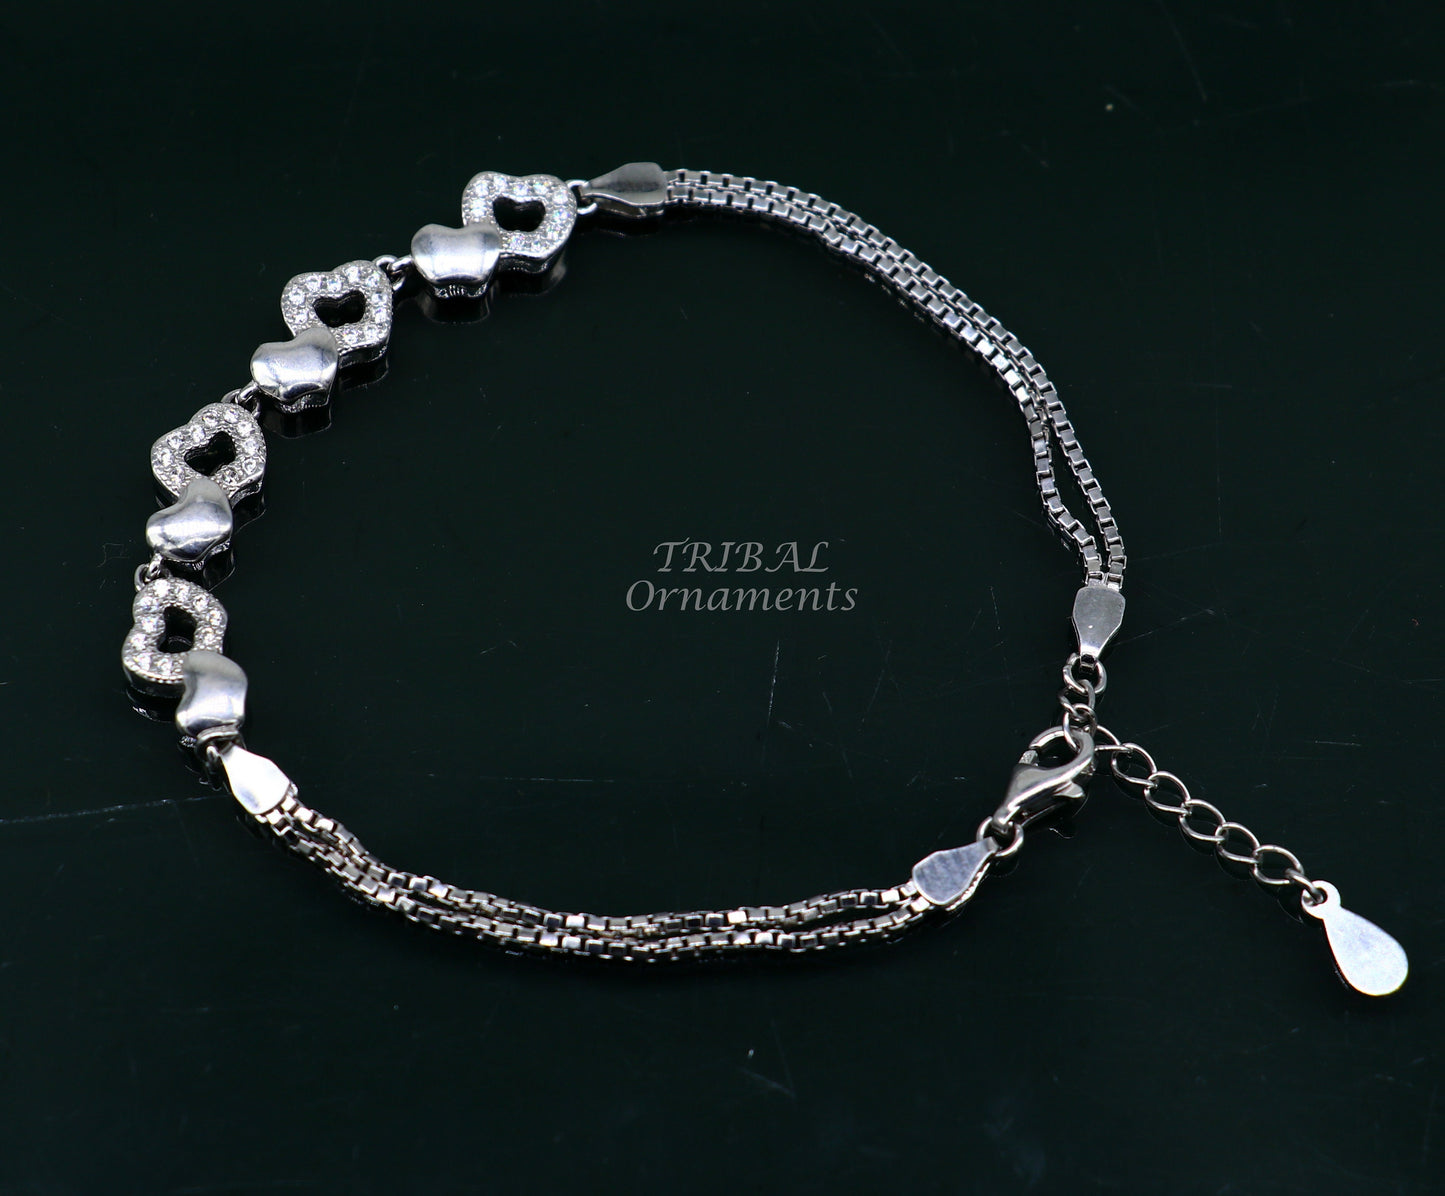 925 sterling silver handmade link chain Bracelet for girl's, Dainty Silver Bracelet, Chain Bracelet, Minimal Jewelry, Gift For Women sbr379 - TRIBAL ORNAMENTS